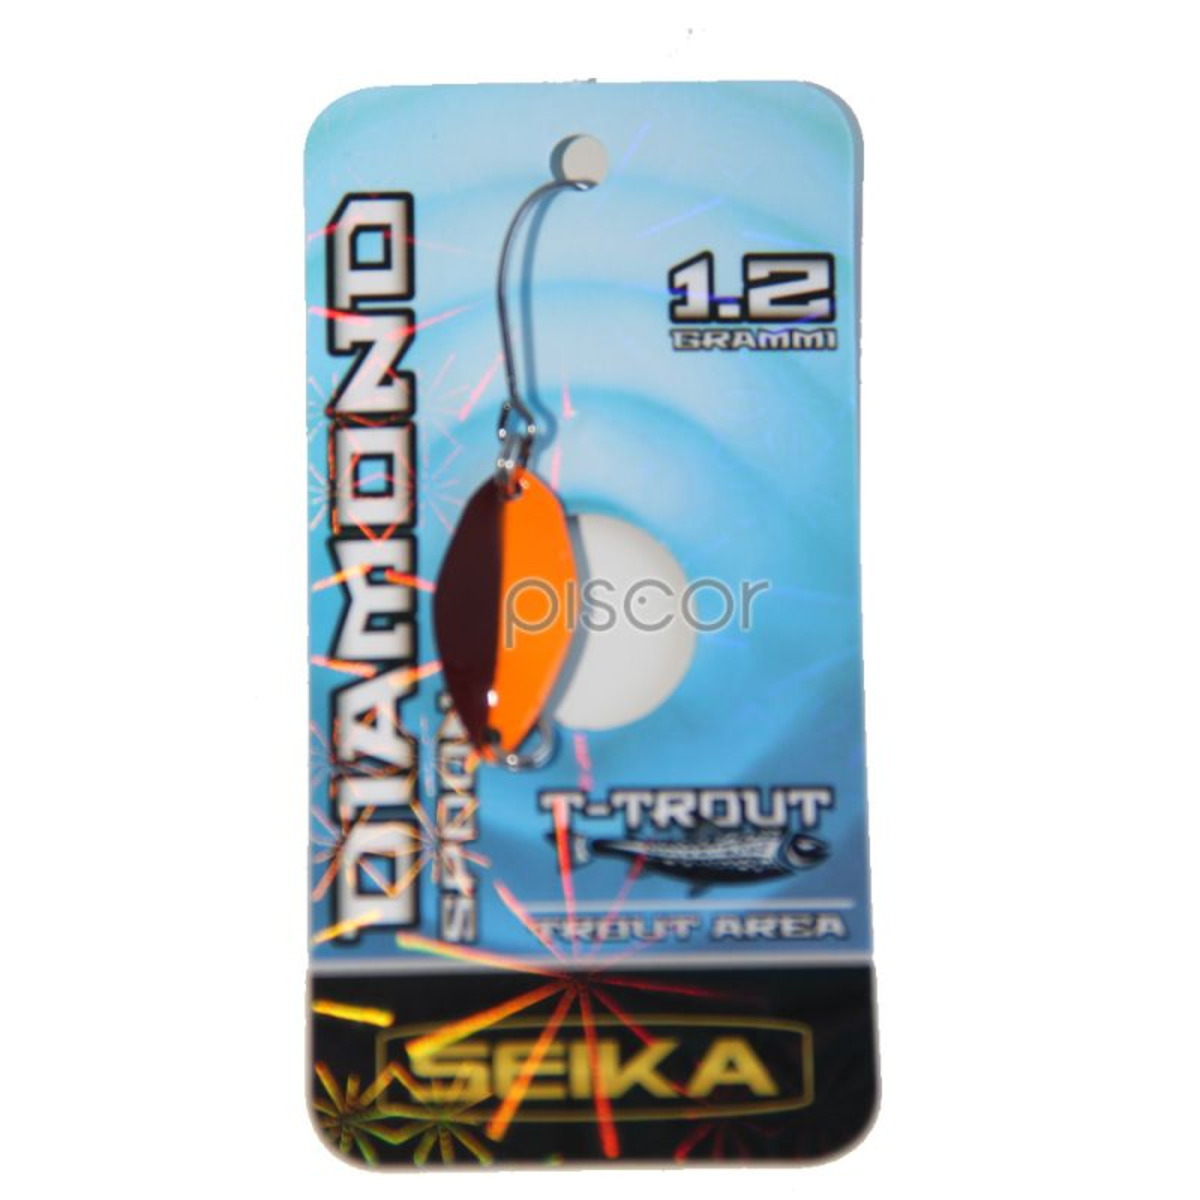 Seika Diamond Spoon - 20 mm - 1.2 g - Fluo Orange Black